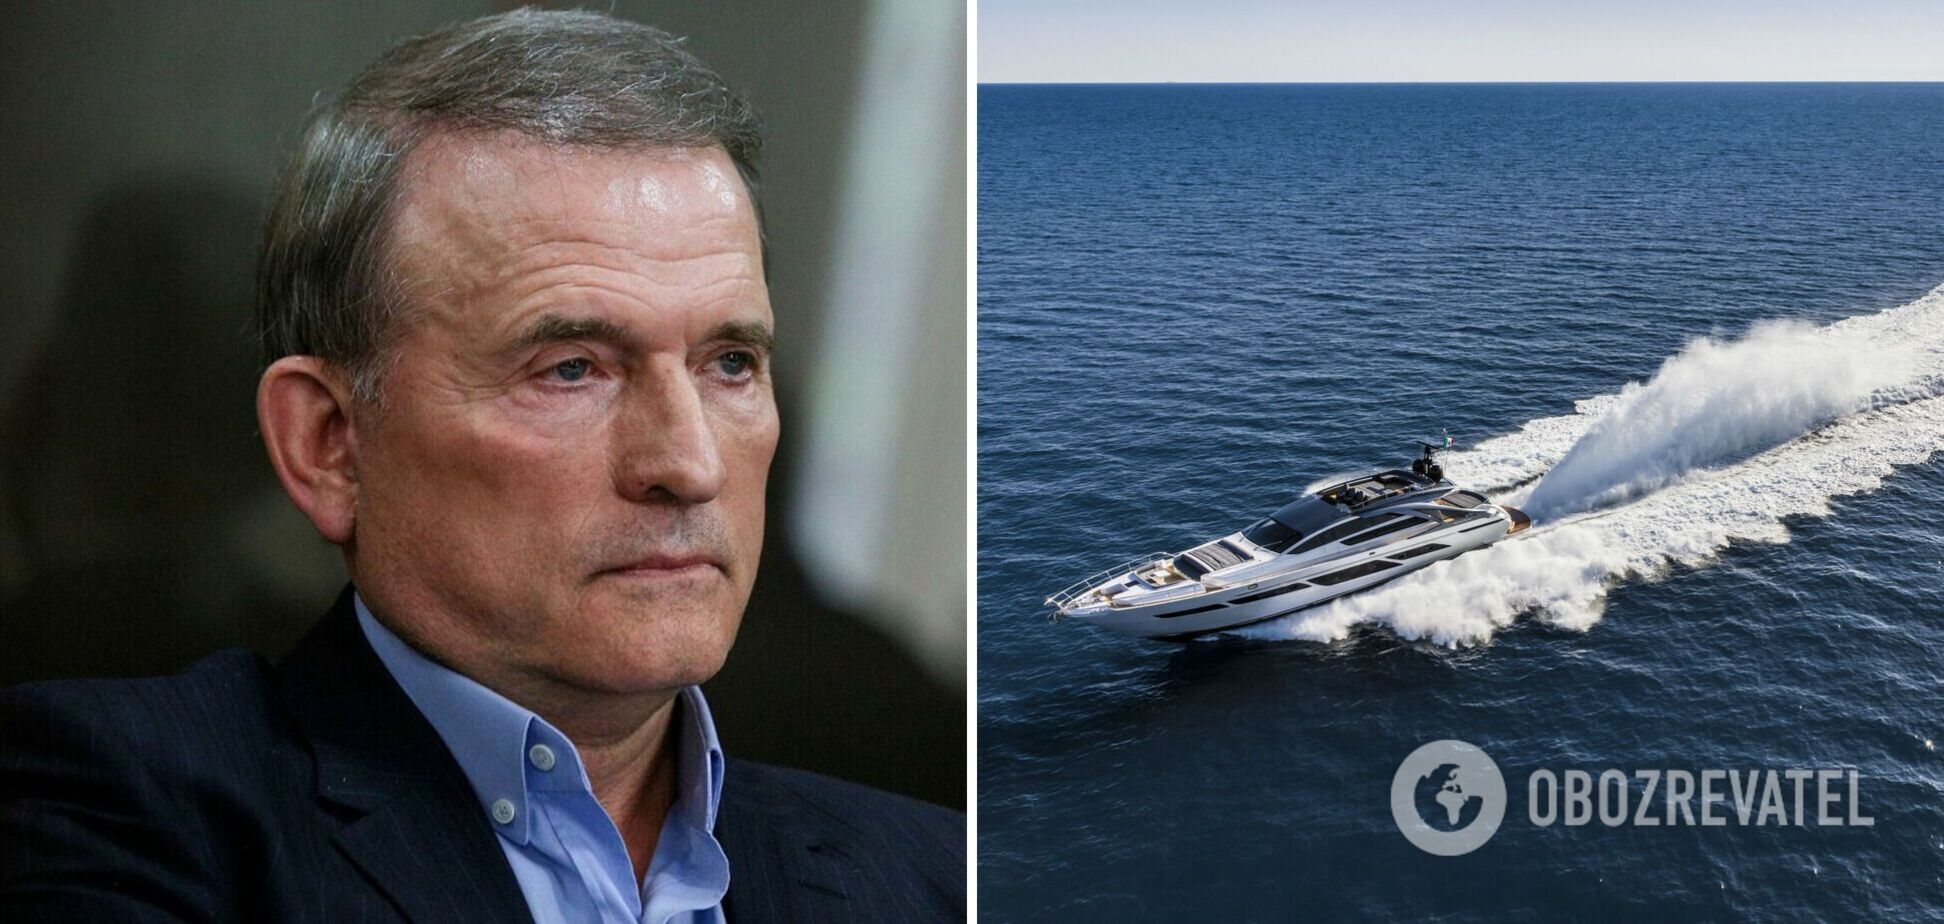 Медведчук купил яхту Pershing 9X, сообщают СМИ